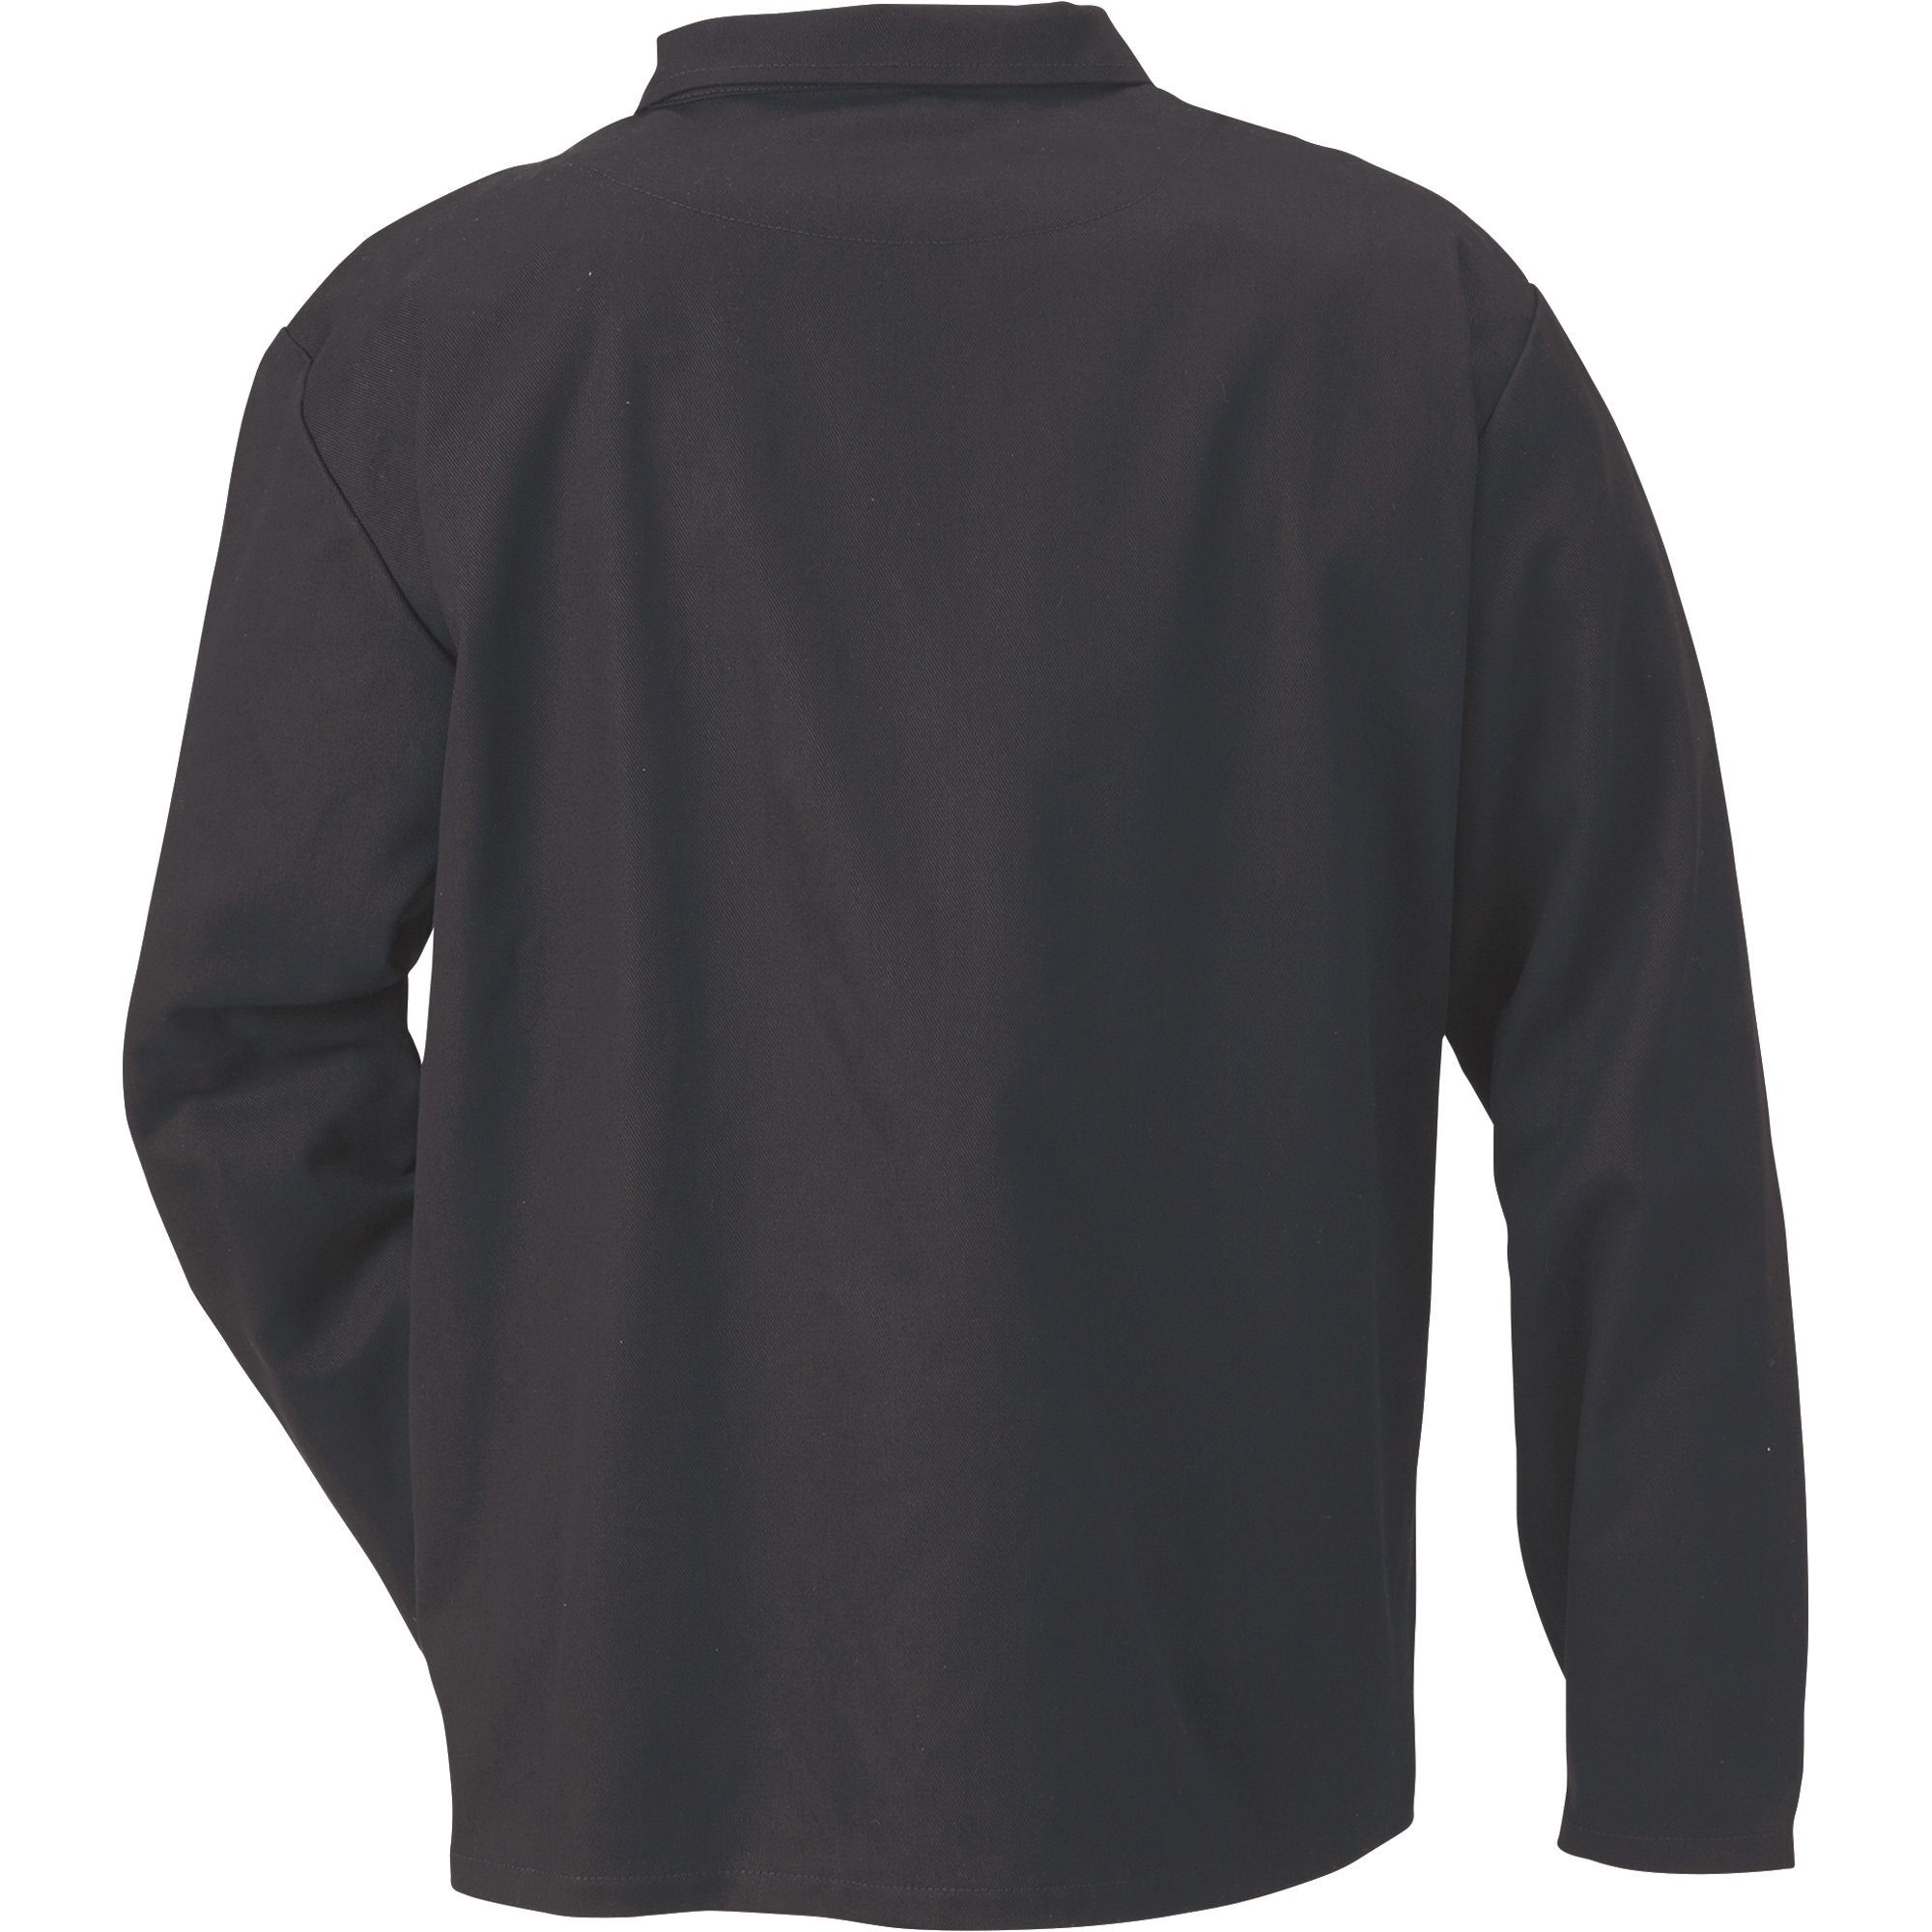 Ironton Flame-Resistant Welding Jacket — Black | Northern Tool